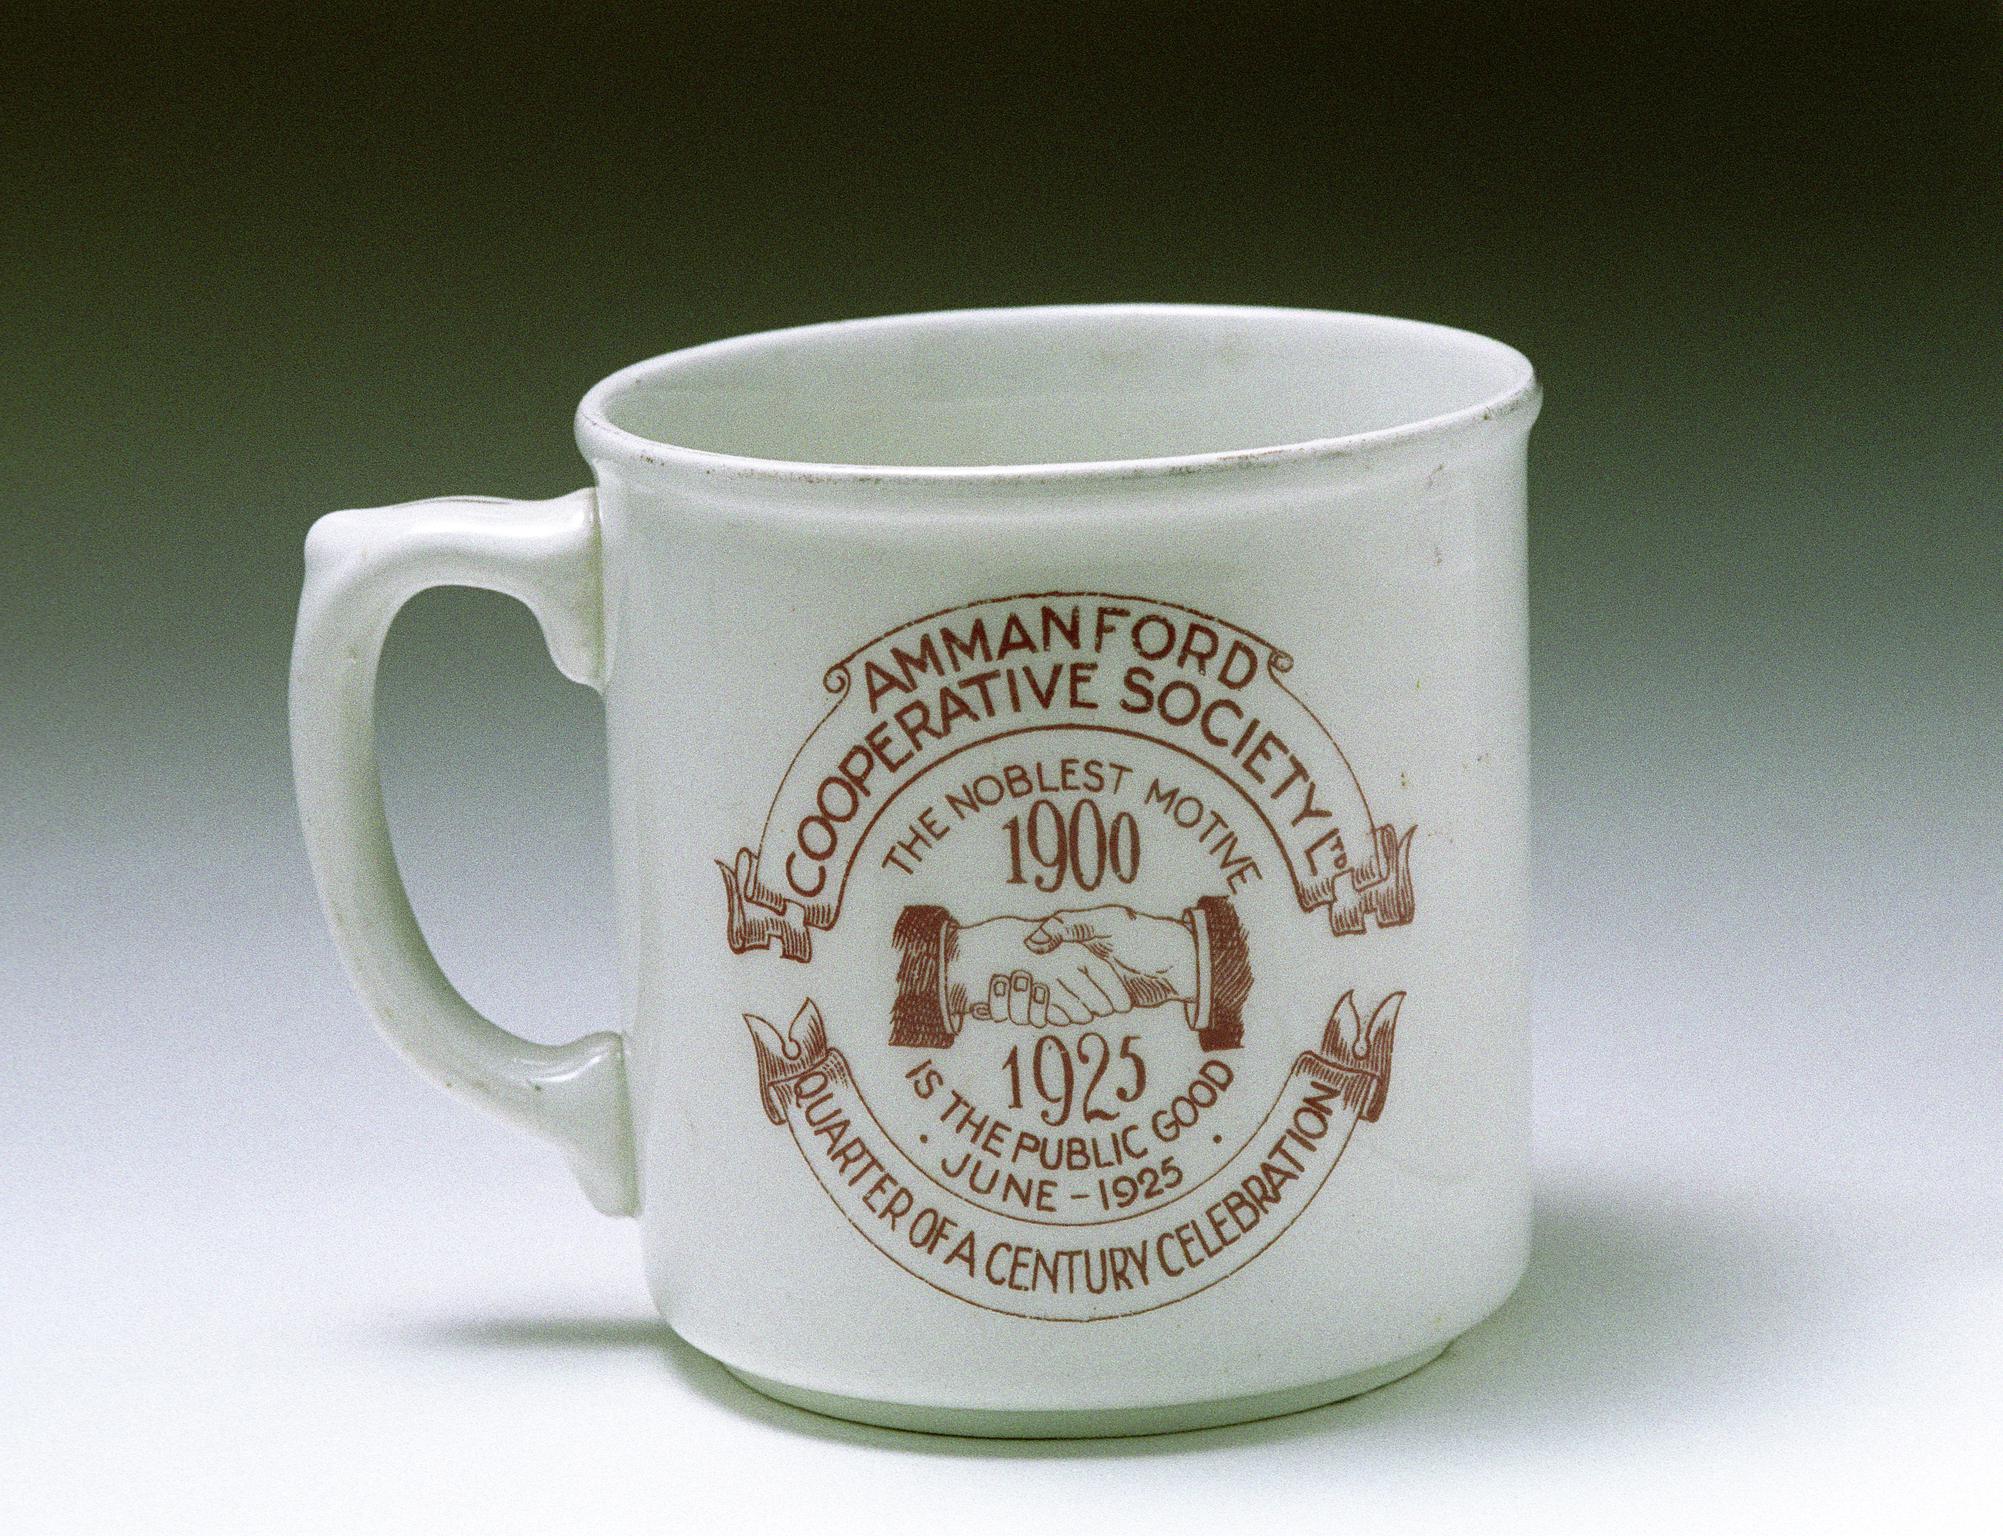 Ammanford Cooperative Society Ltd., mug